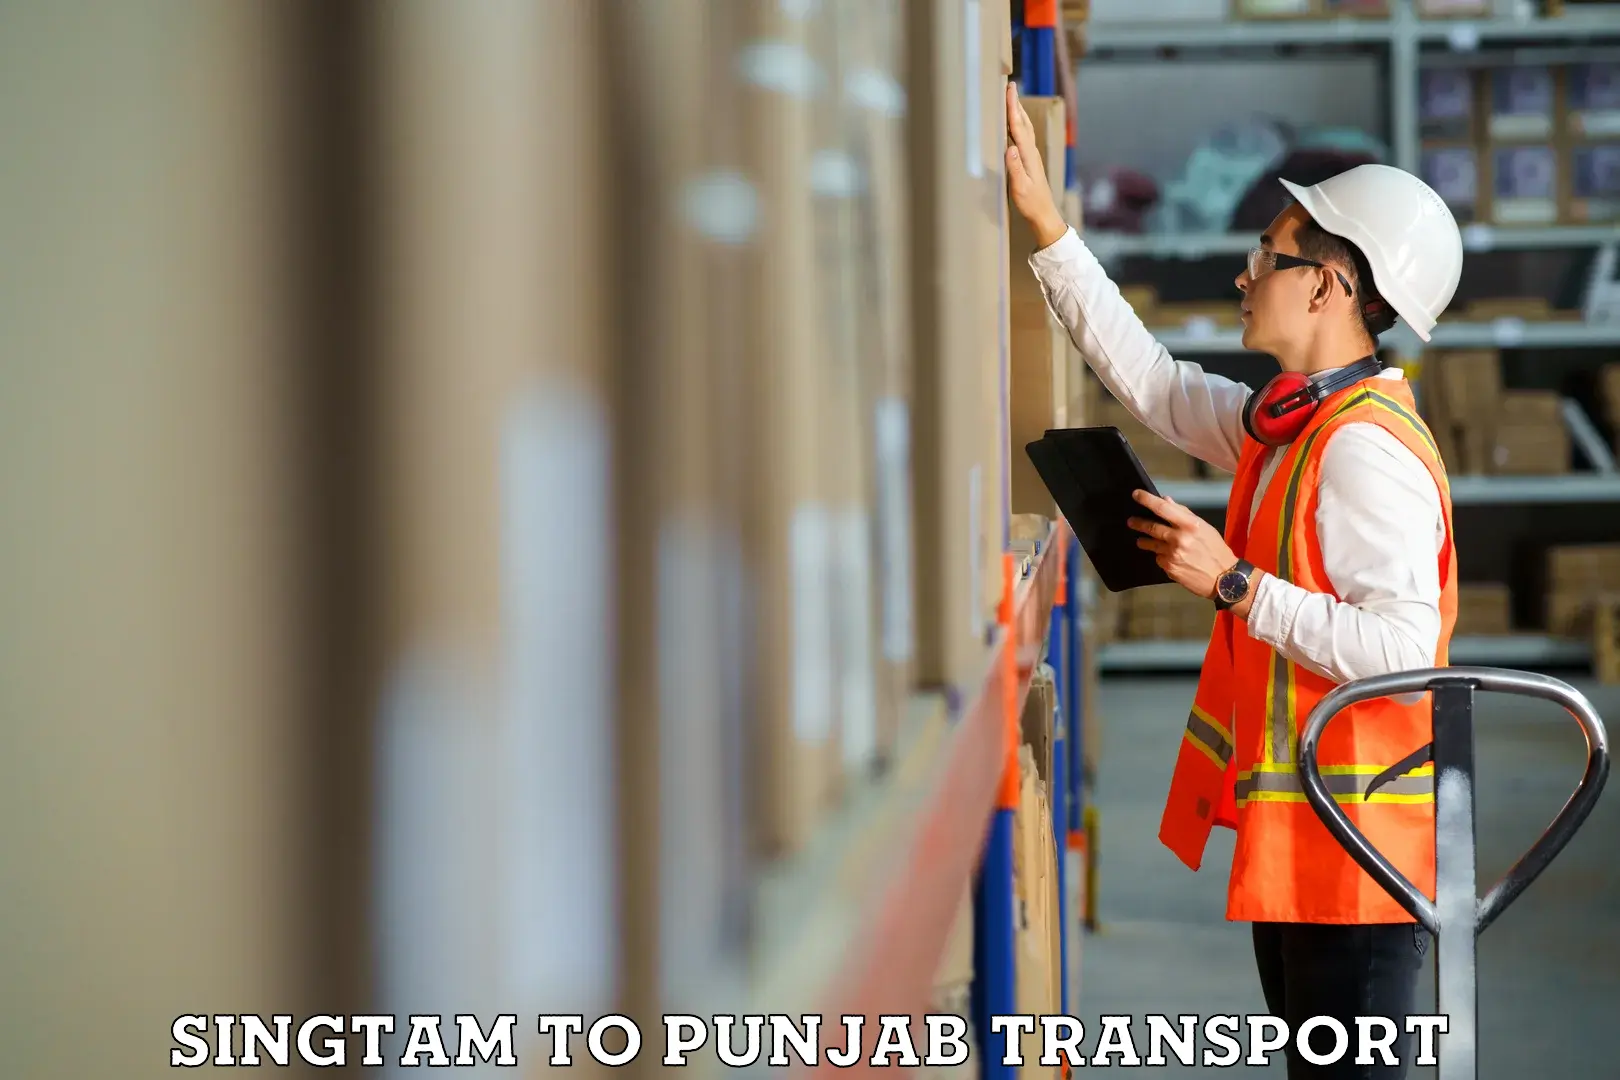 Container transport service Singtam to Punjab